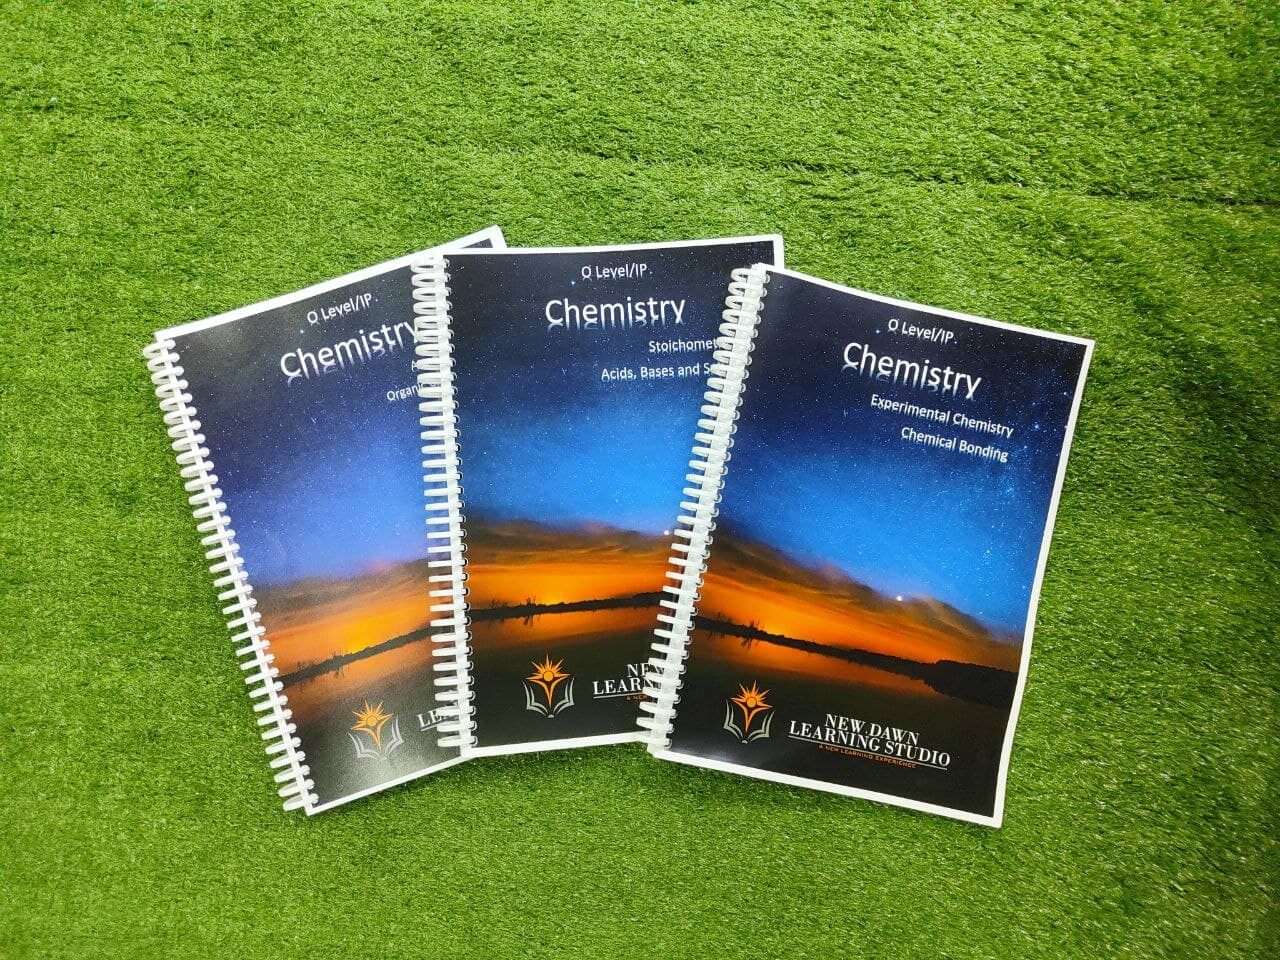 O Level Chemistry | New Dawn Learning Studio